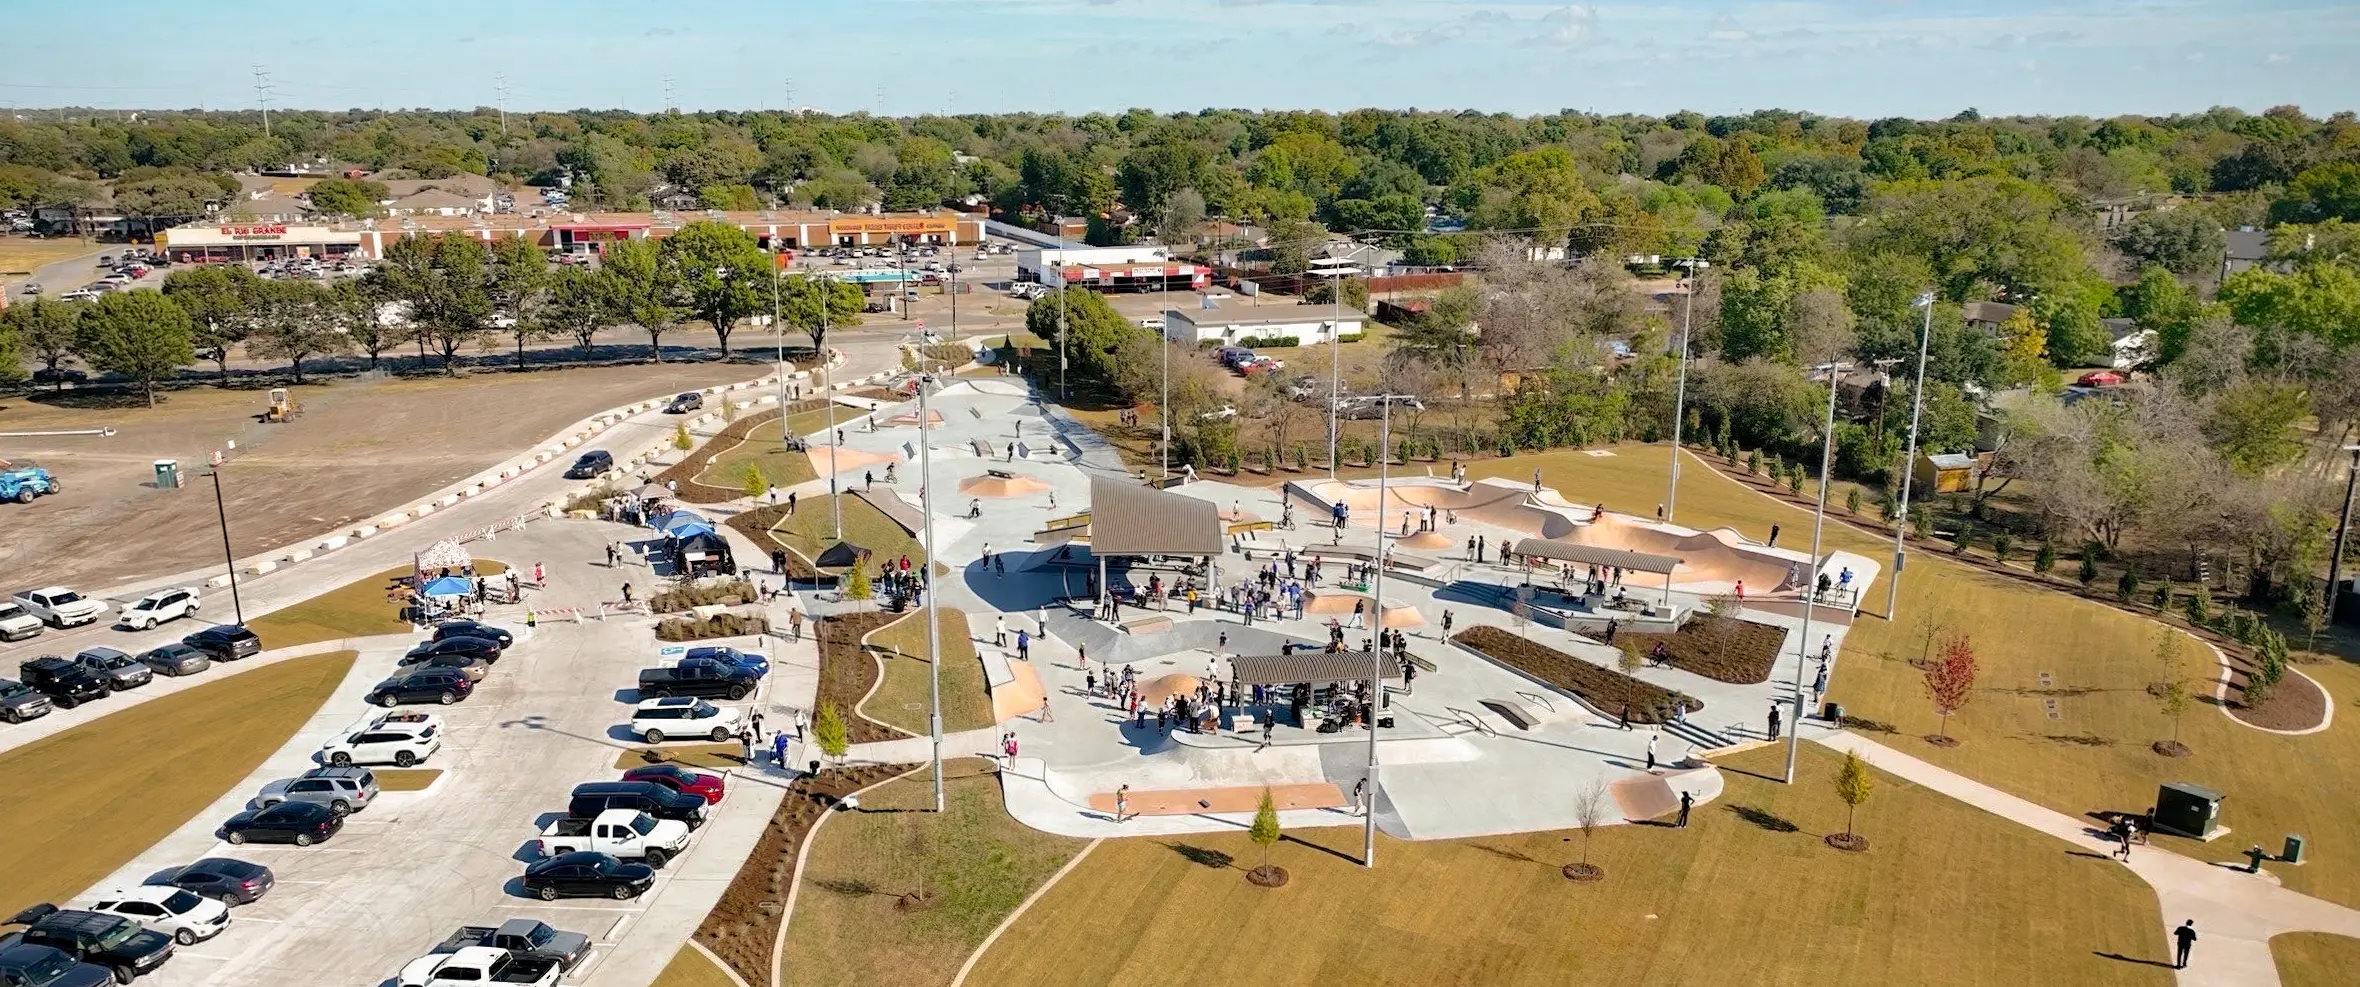 City of Garland Texas Rick Oden Skate Park